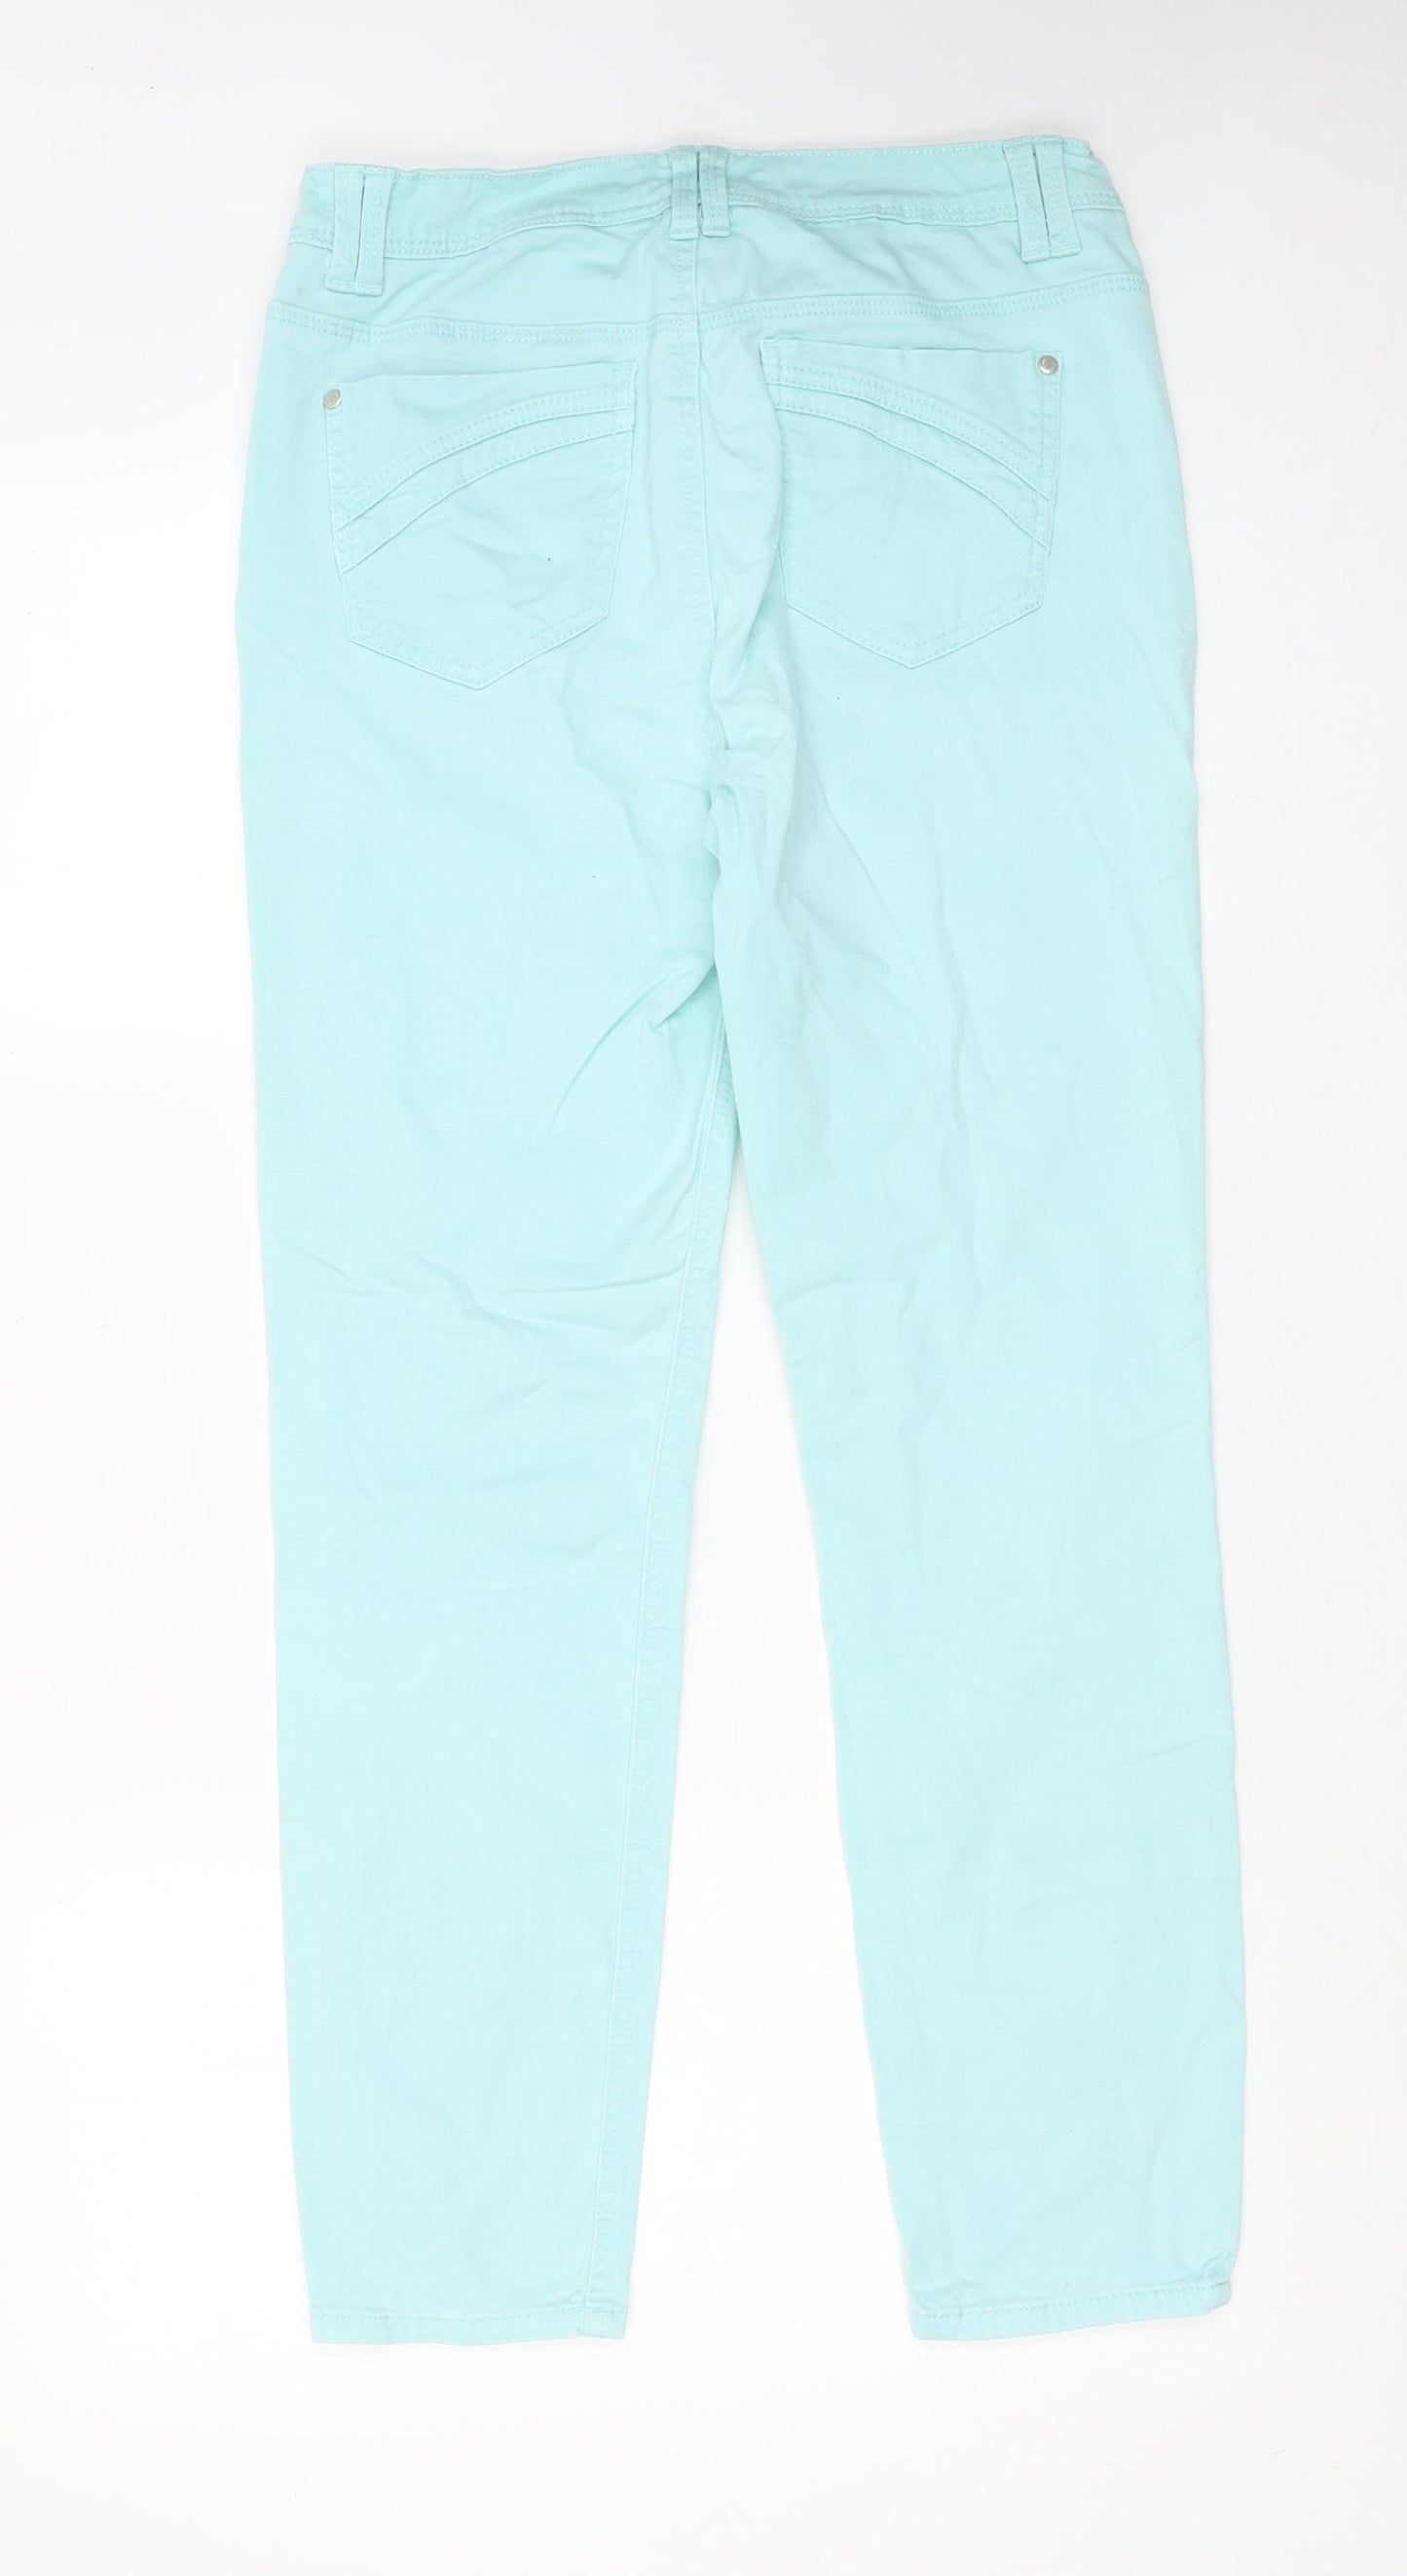 Bandolino Womens Blue Cotton Skinny Jeans Size 10 Regular Zip